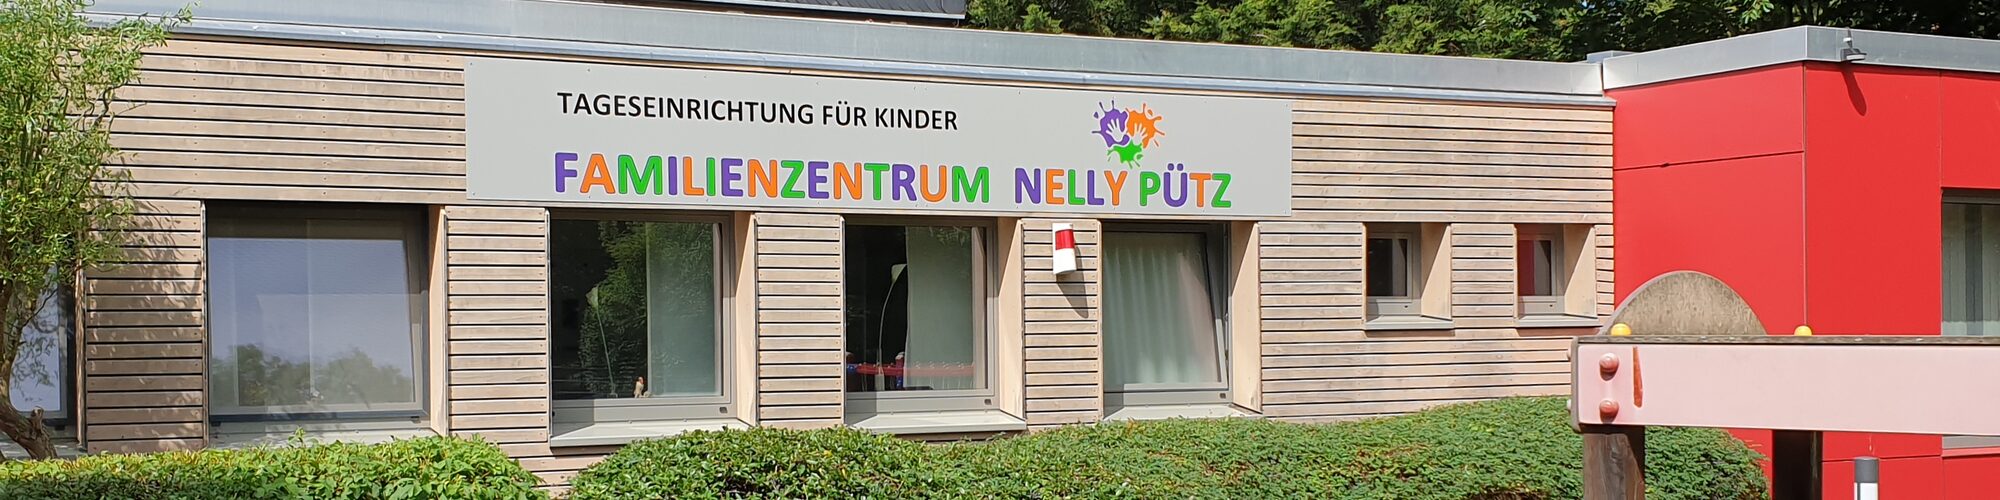 Familienzentrum Nelly Pütz